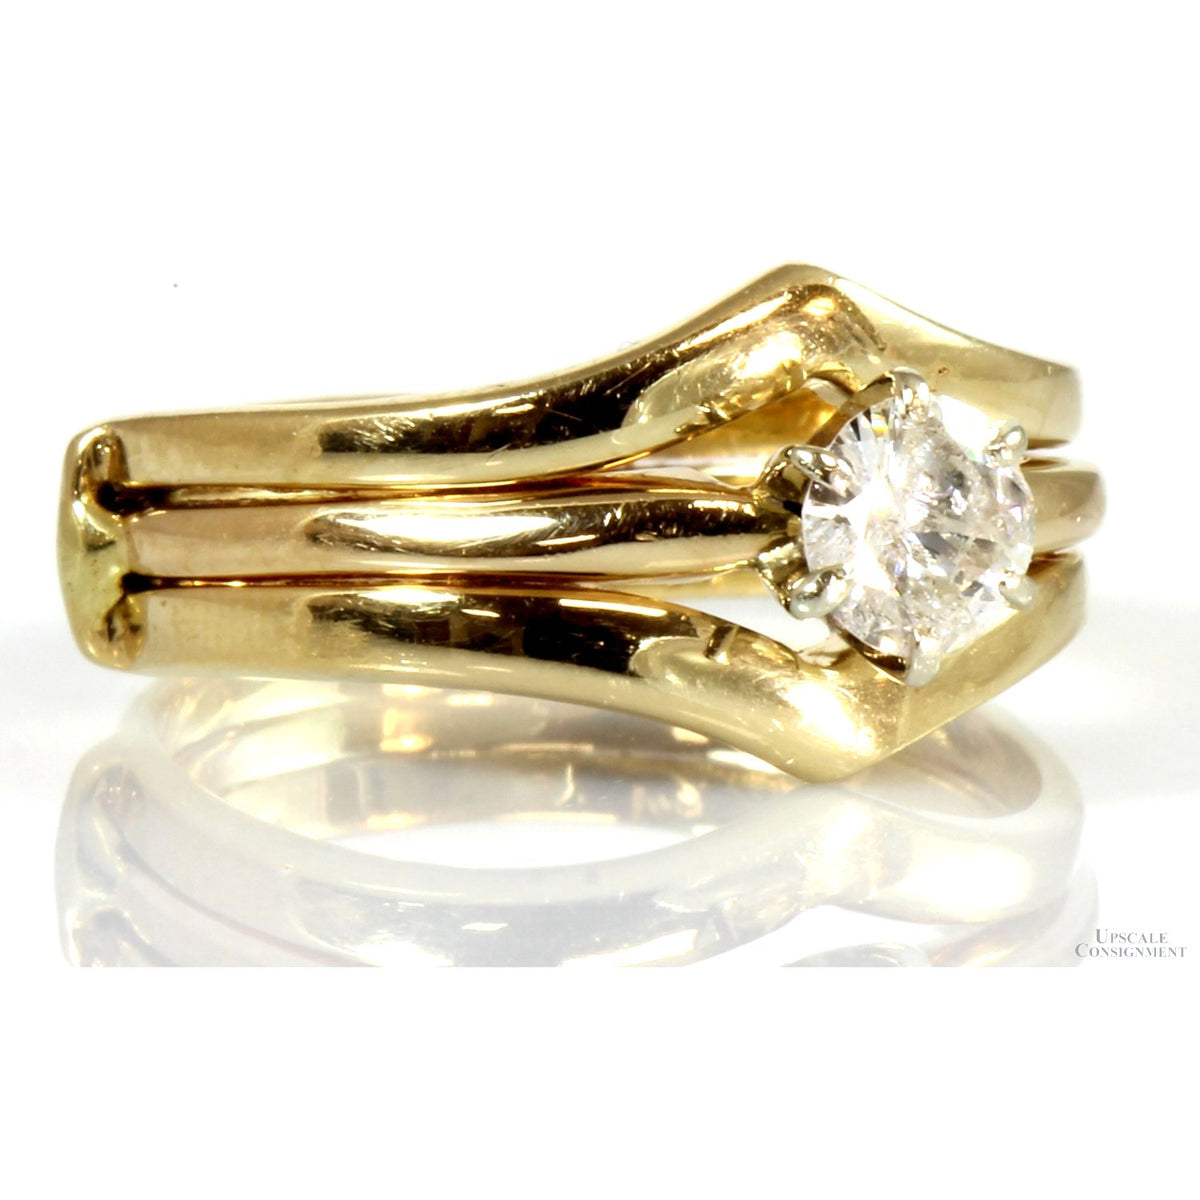 .64ct Diamond 14K Yellow Gold Engagement Wedding Ring Set